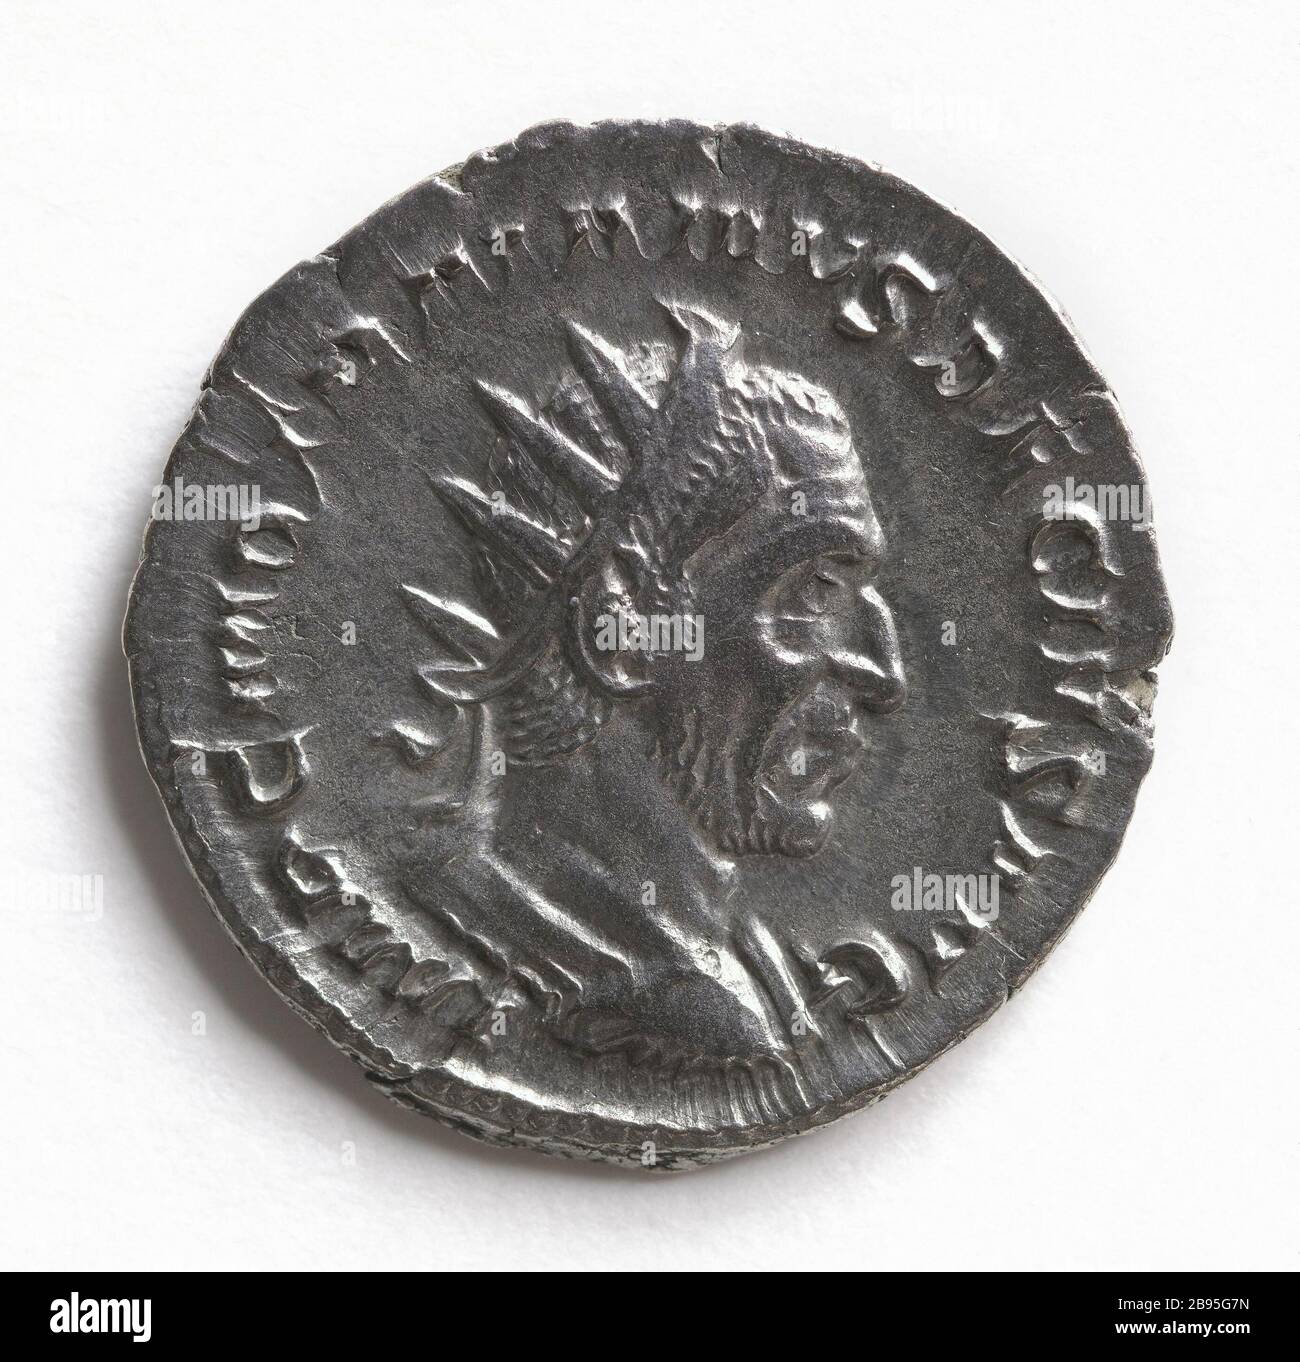 Antoninien Trajan Decius, 250 Monnaie Romaine. Antoninien de Trajan Dèce (vers 201-251), empereur romain de 249 à 251. Argent (Avers). 250. Paris, musée Carnavalet. Stockfoto